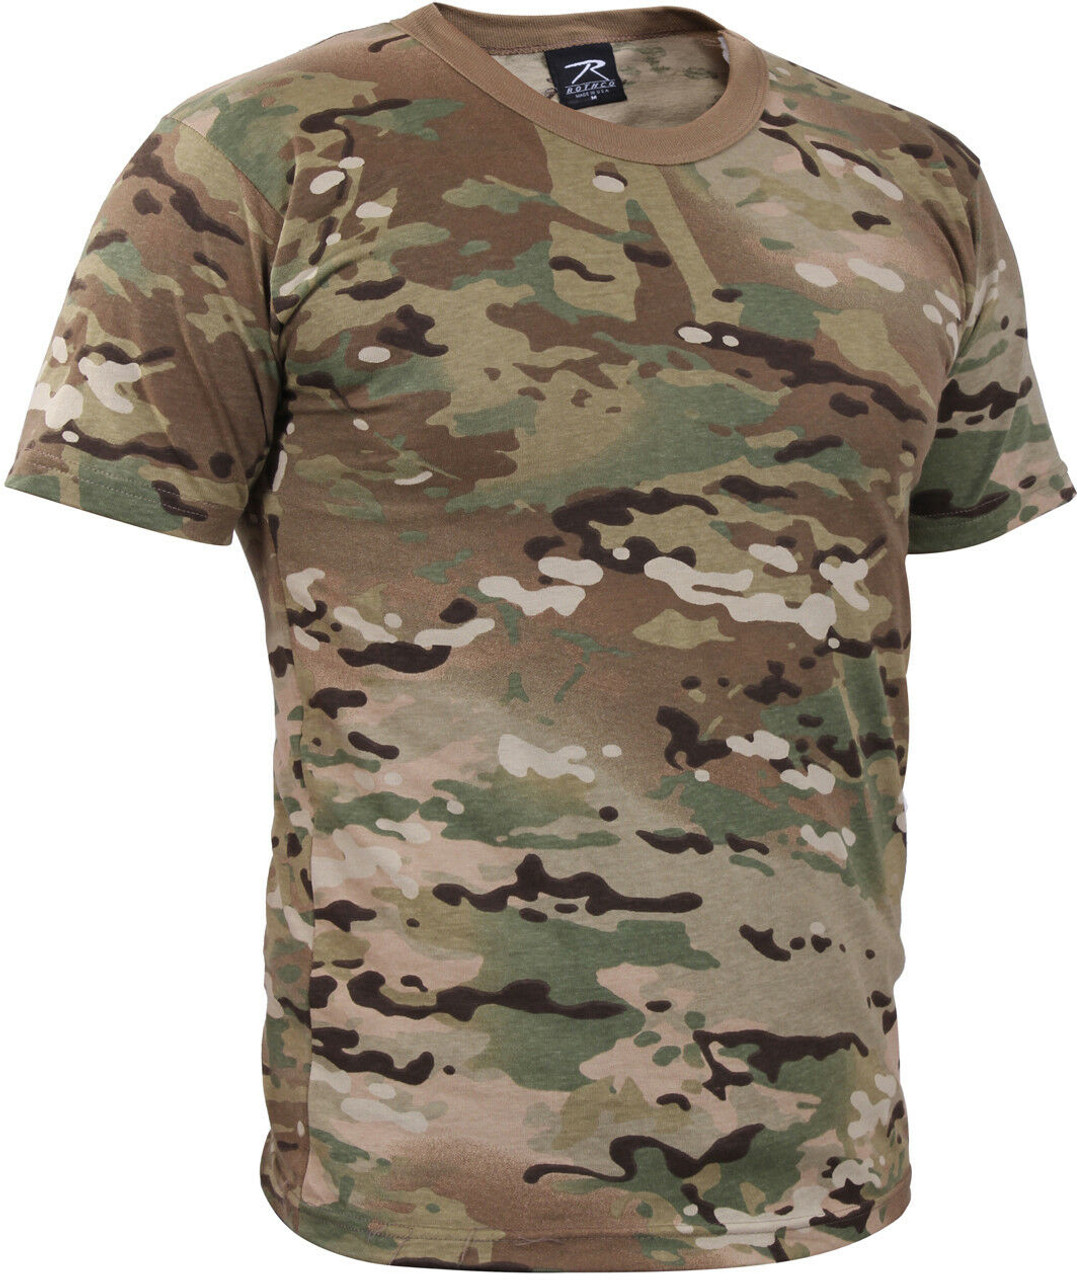 Camo T-Shirt Tactical Tee Short Sleeve Military Army Camouflage Uniform  Fashion